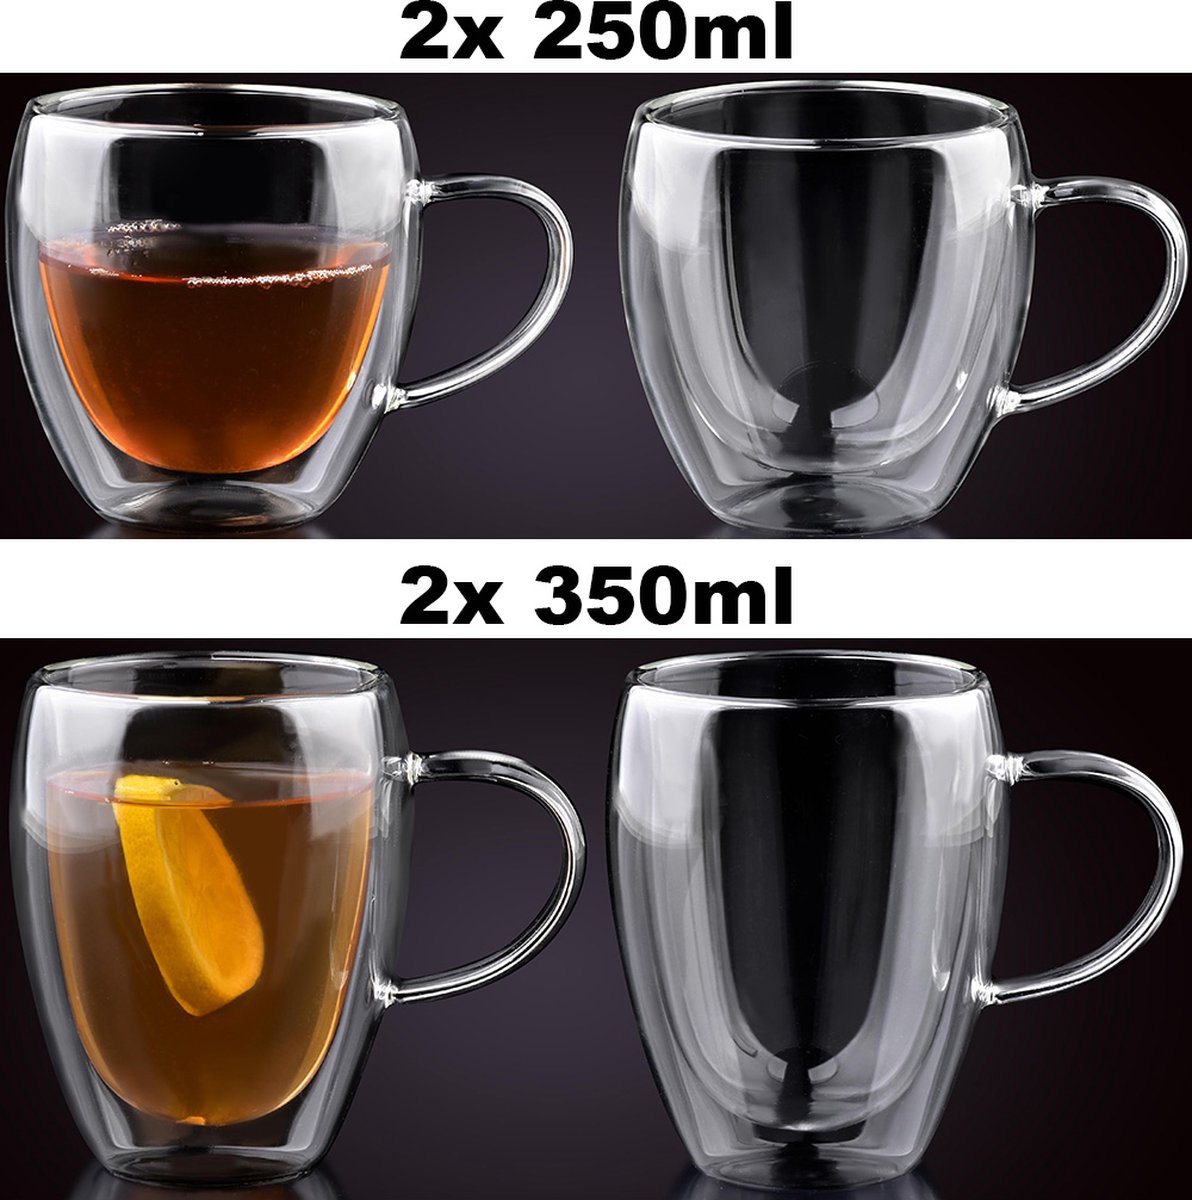 MONOO Dubbelwandige Glazen met Oor - 2x 250ml + 2x 350ml - Koffieglazen - Espresso Glazen - Cappuccino Glazen - Latte Macchiato Glazen